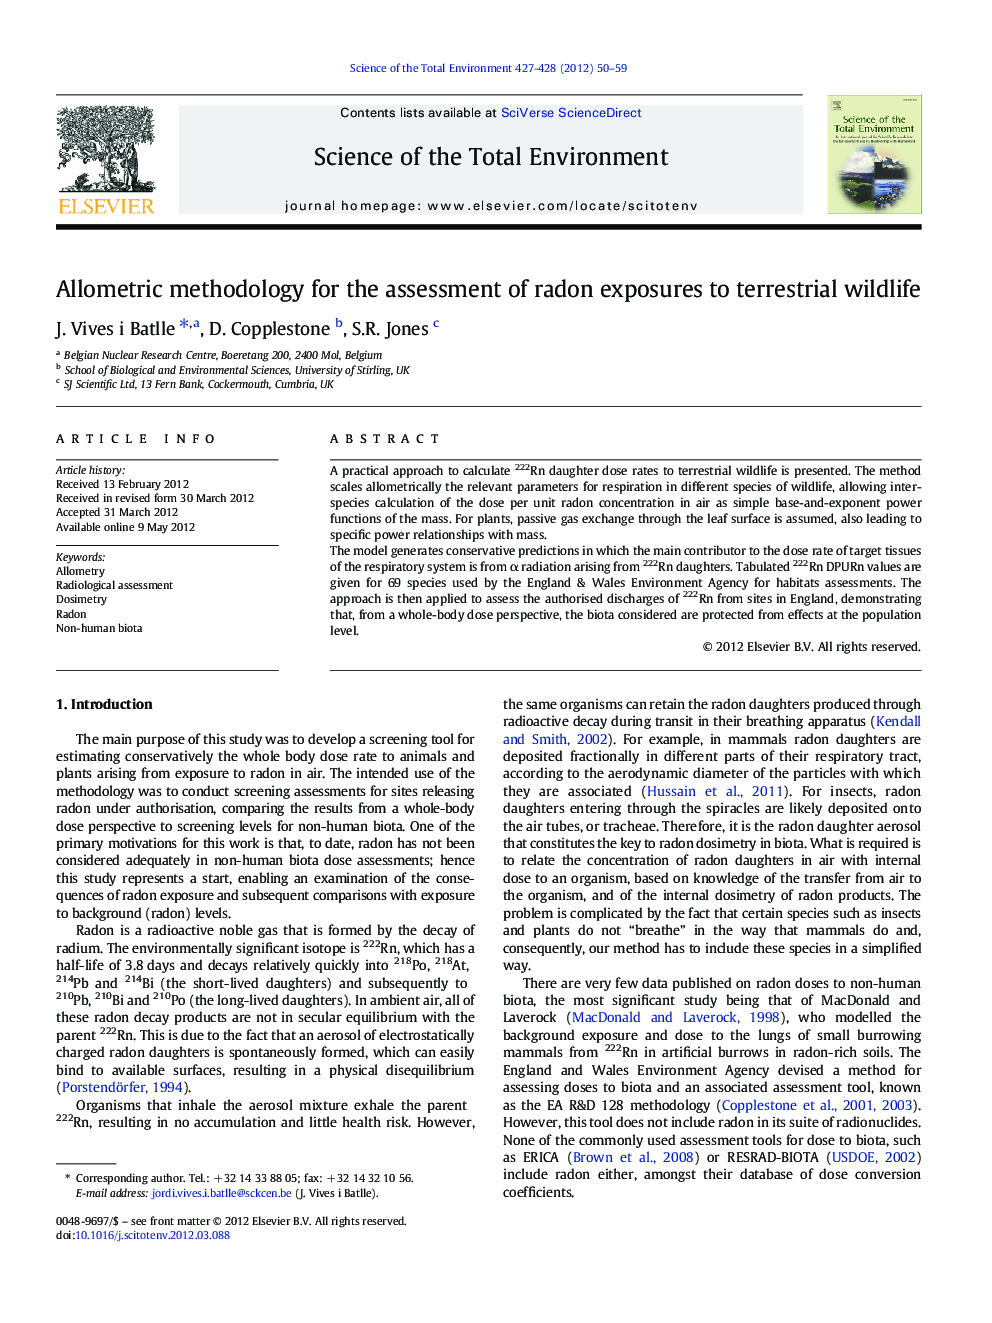 Allometric methodology for the assessment of radon exposures to terrestrial wildlife